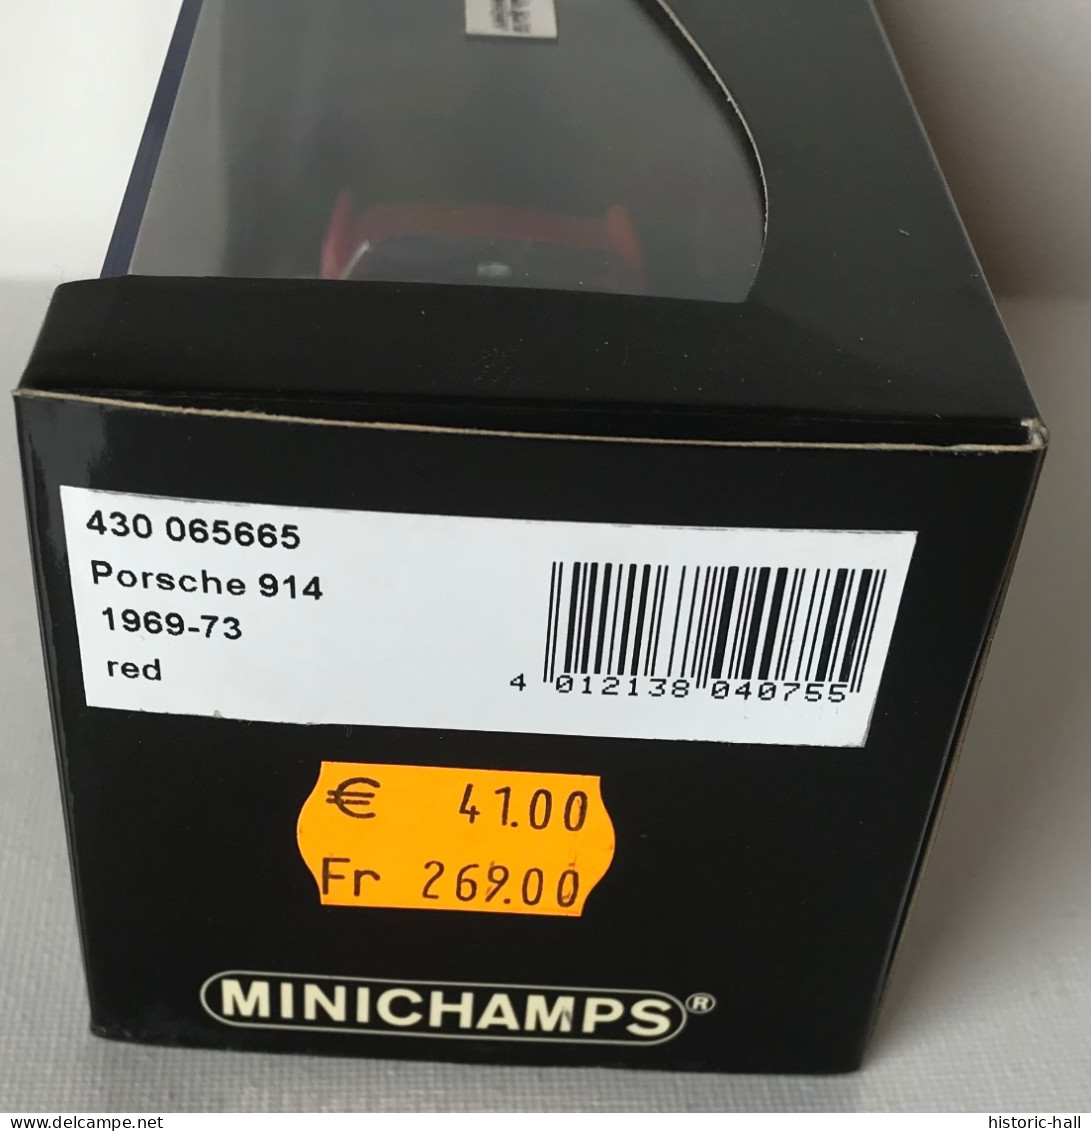 MINICHAMPS - PORSCHE 914 (1969-73)